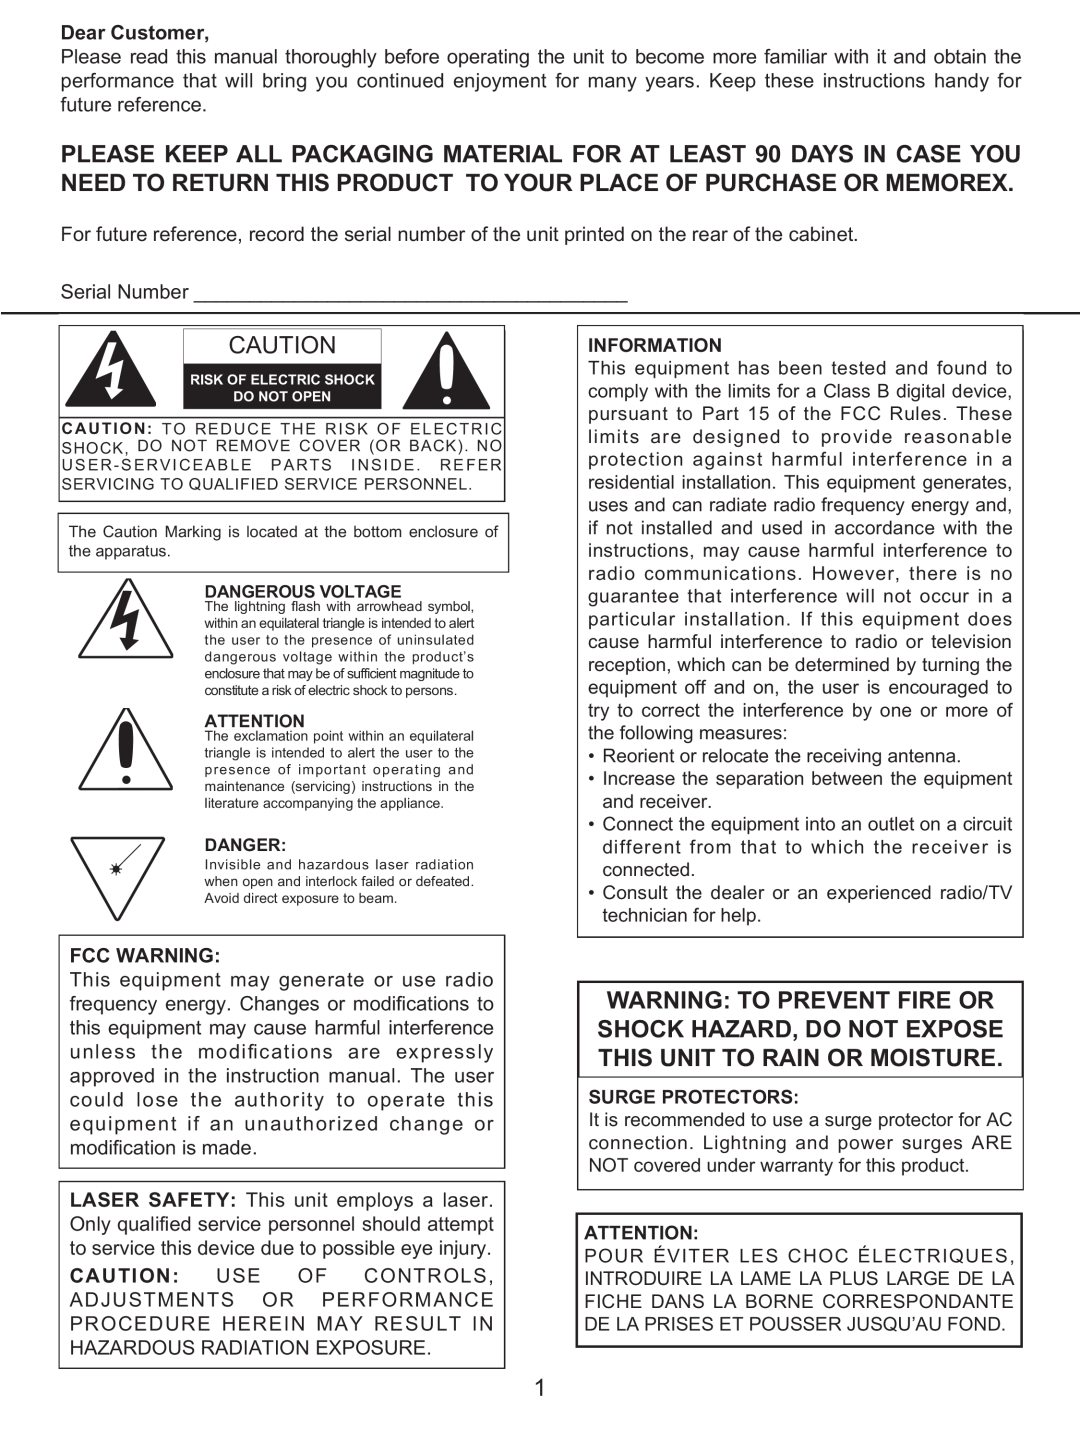 Memorex MX4122 manual Dear Customer, Fcc Warning, Information, Surge Protectors 